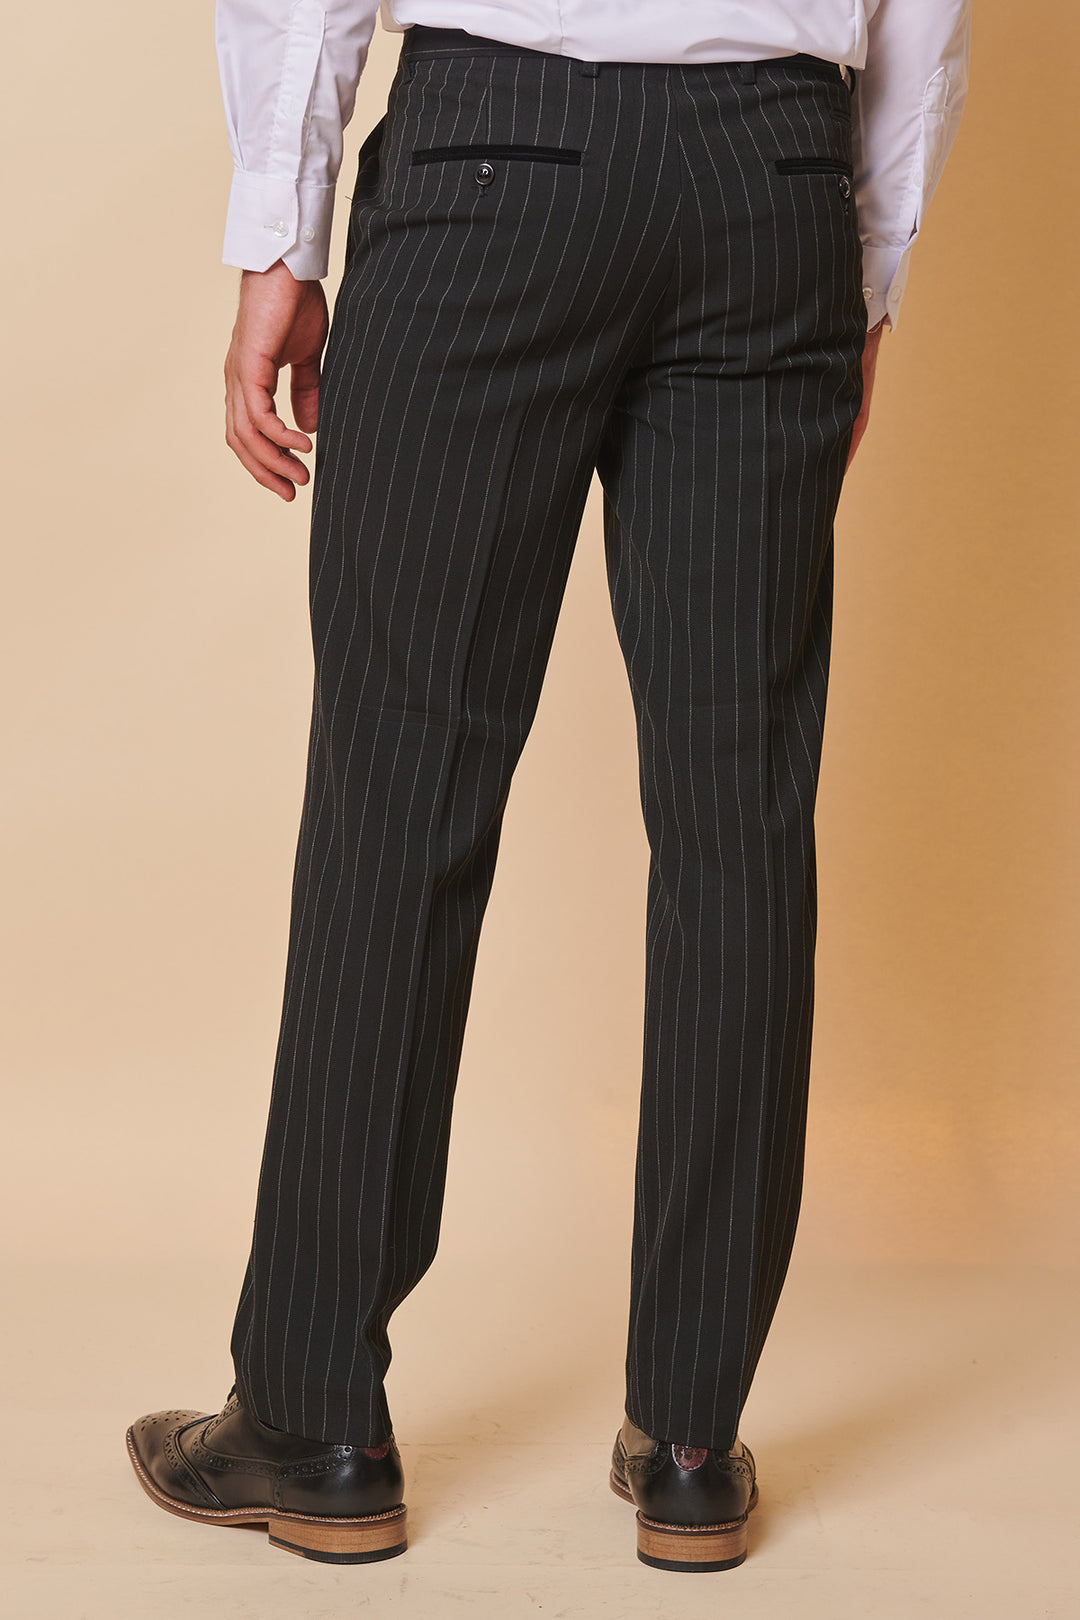 ROCCO - Black Pinstripe Trousers